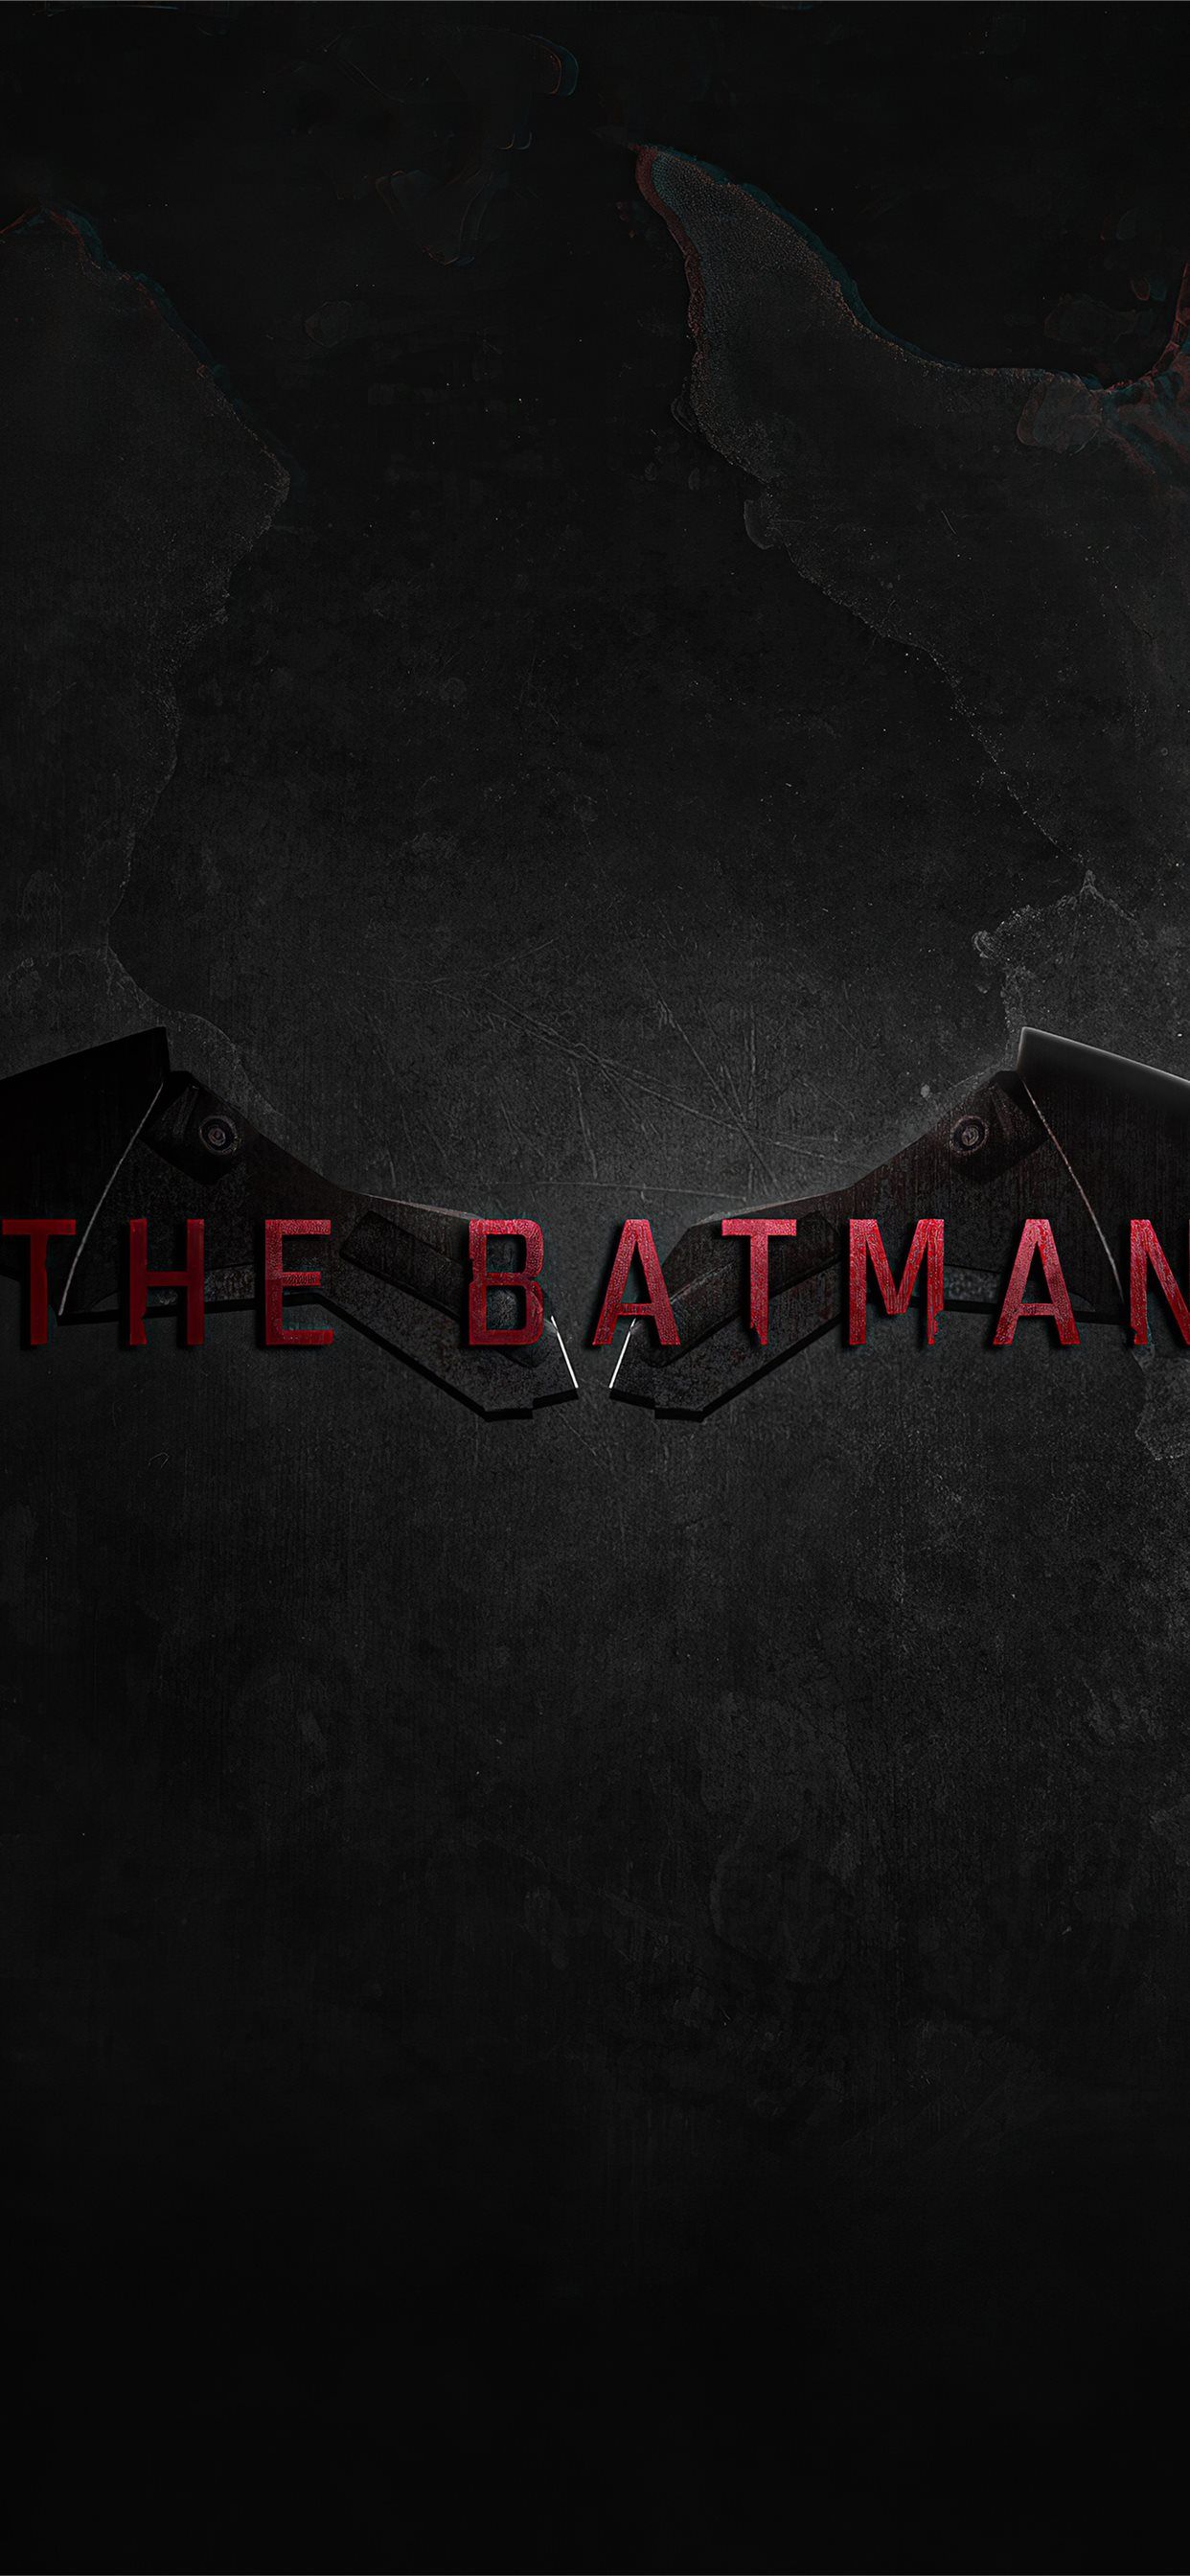 the batman movie logo 4k iPhone Wallpaper Free Download